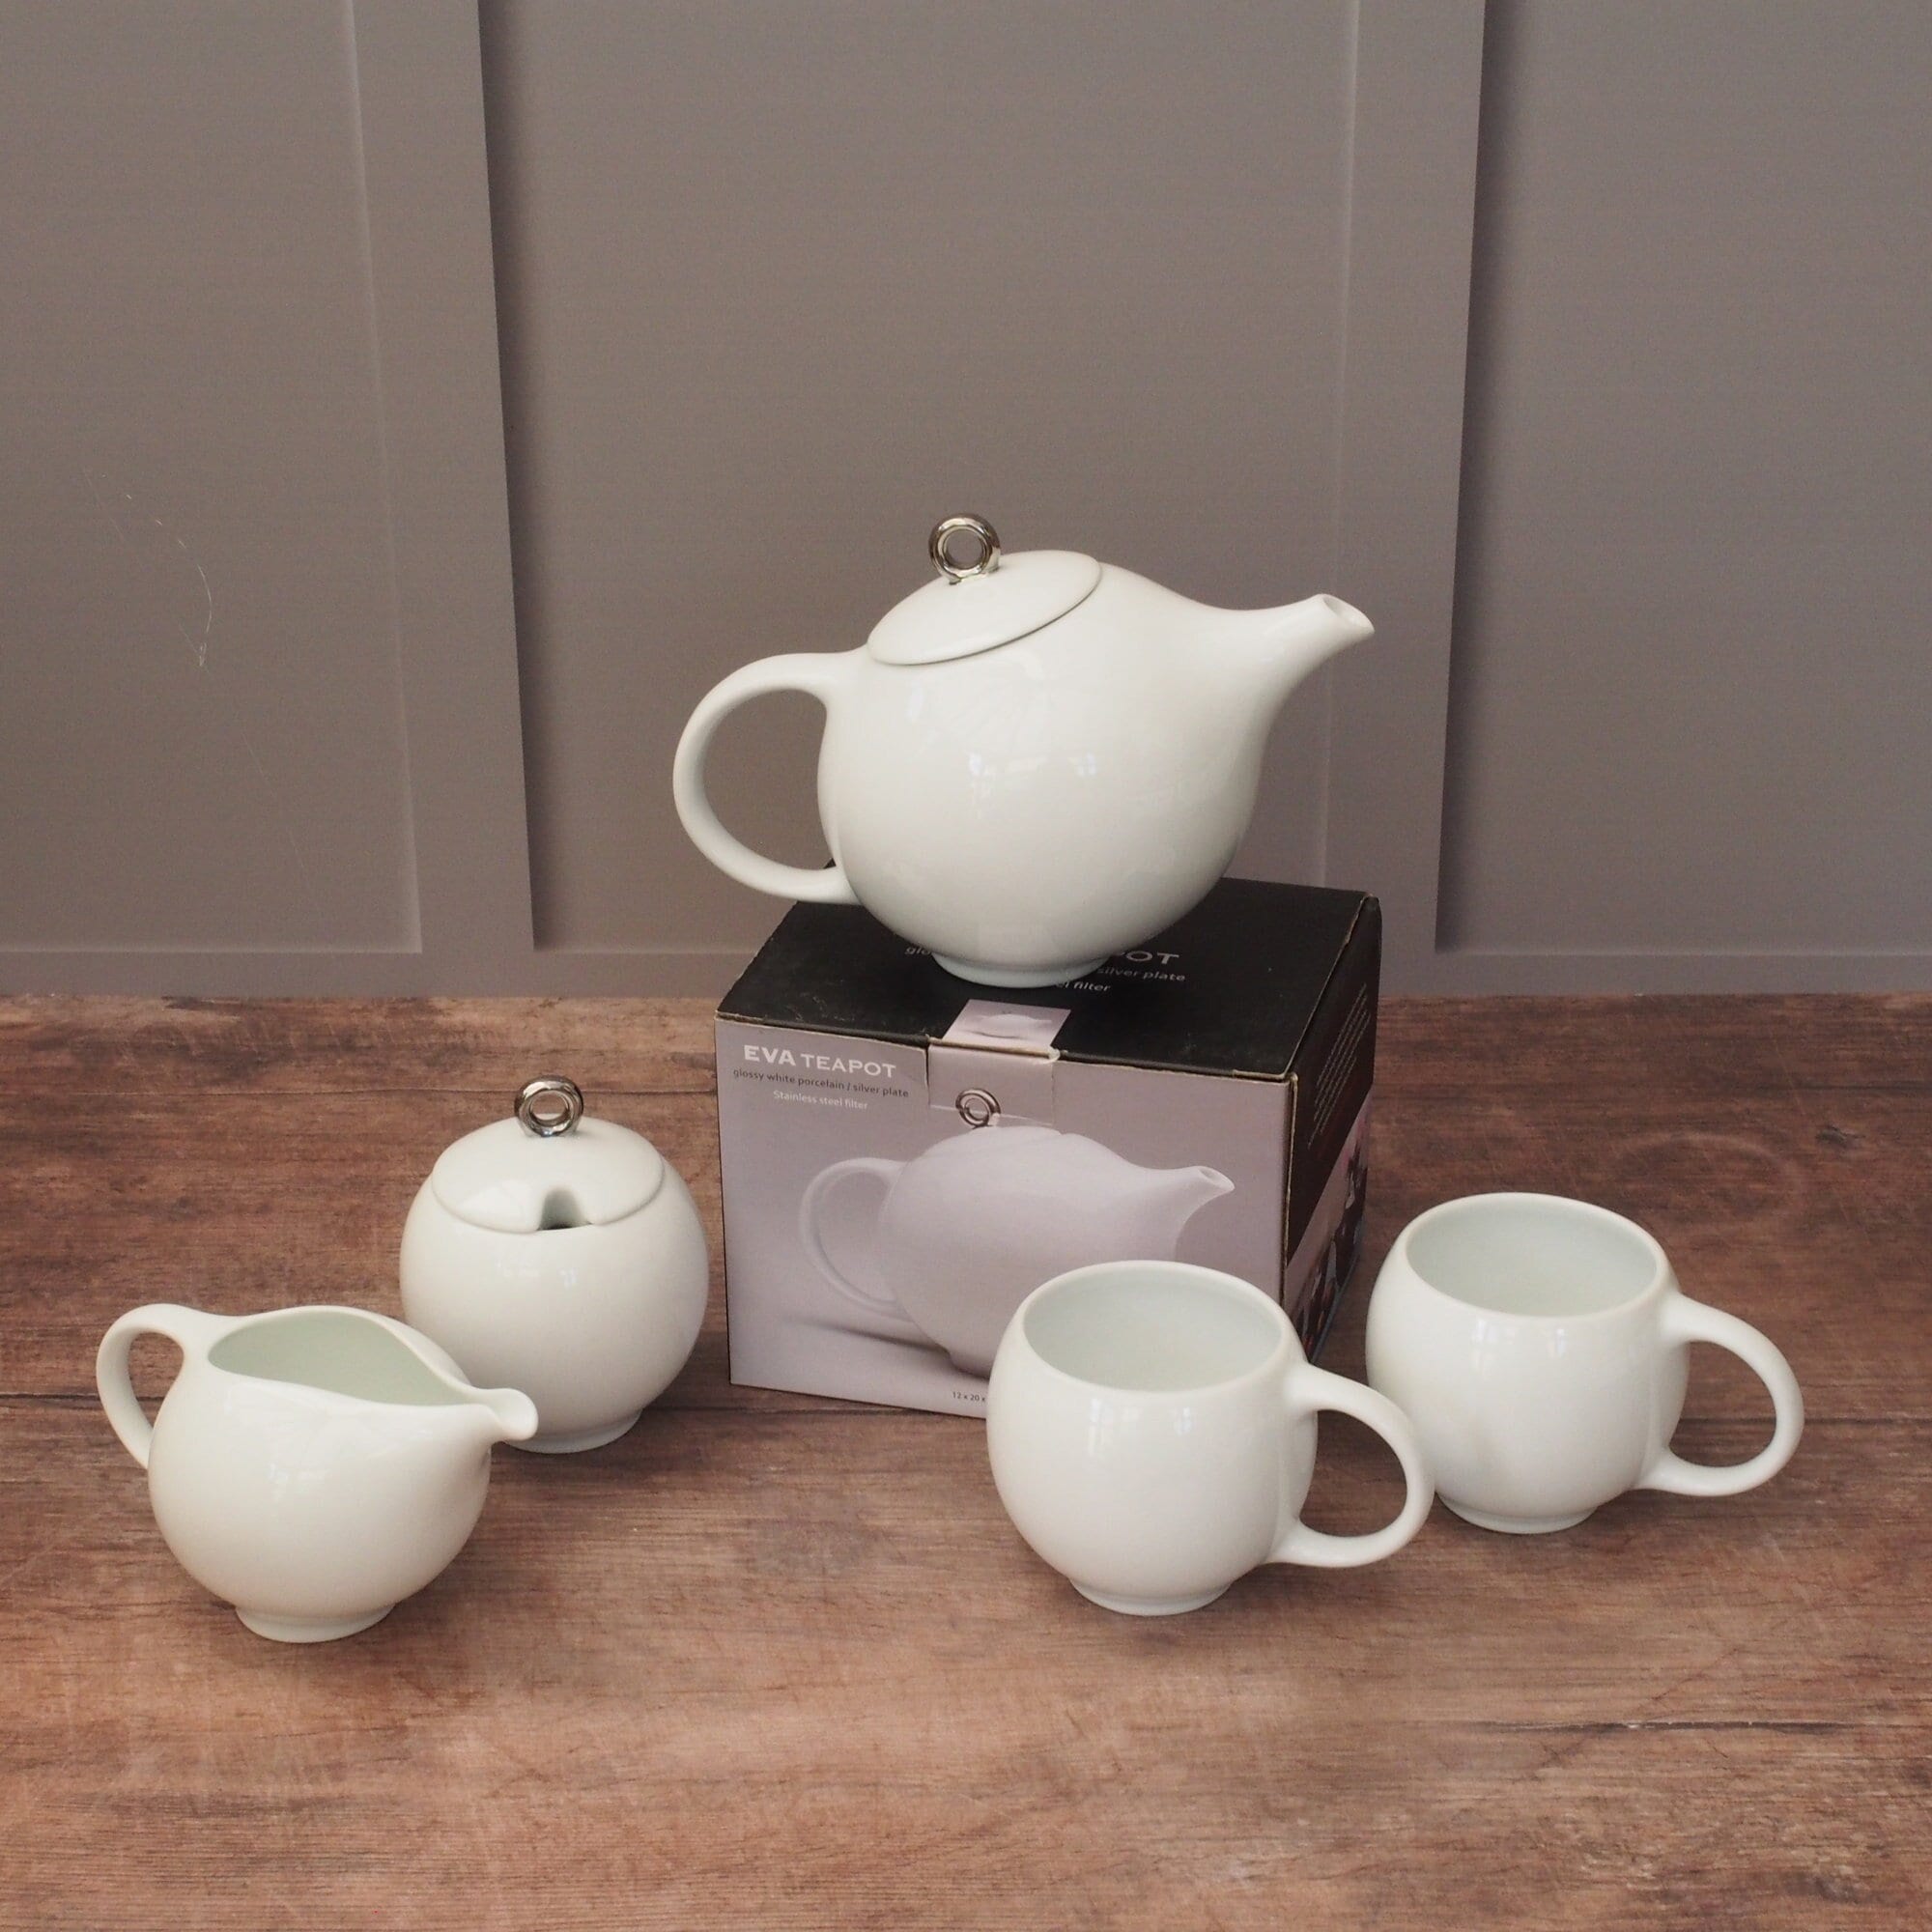 Eva tea set: Modern teapot, tea cups, creamer, sugar bowl, serving